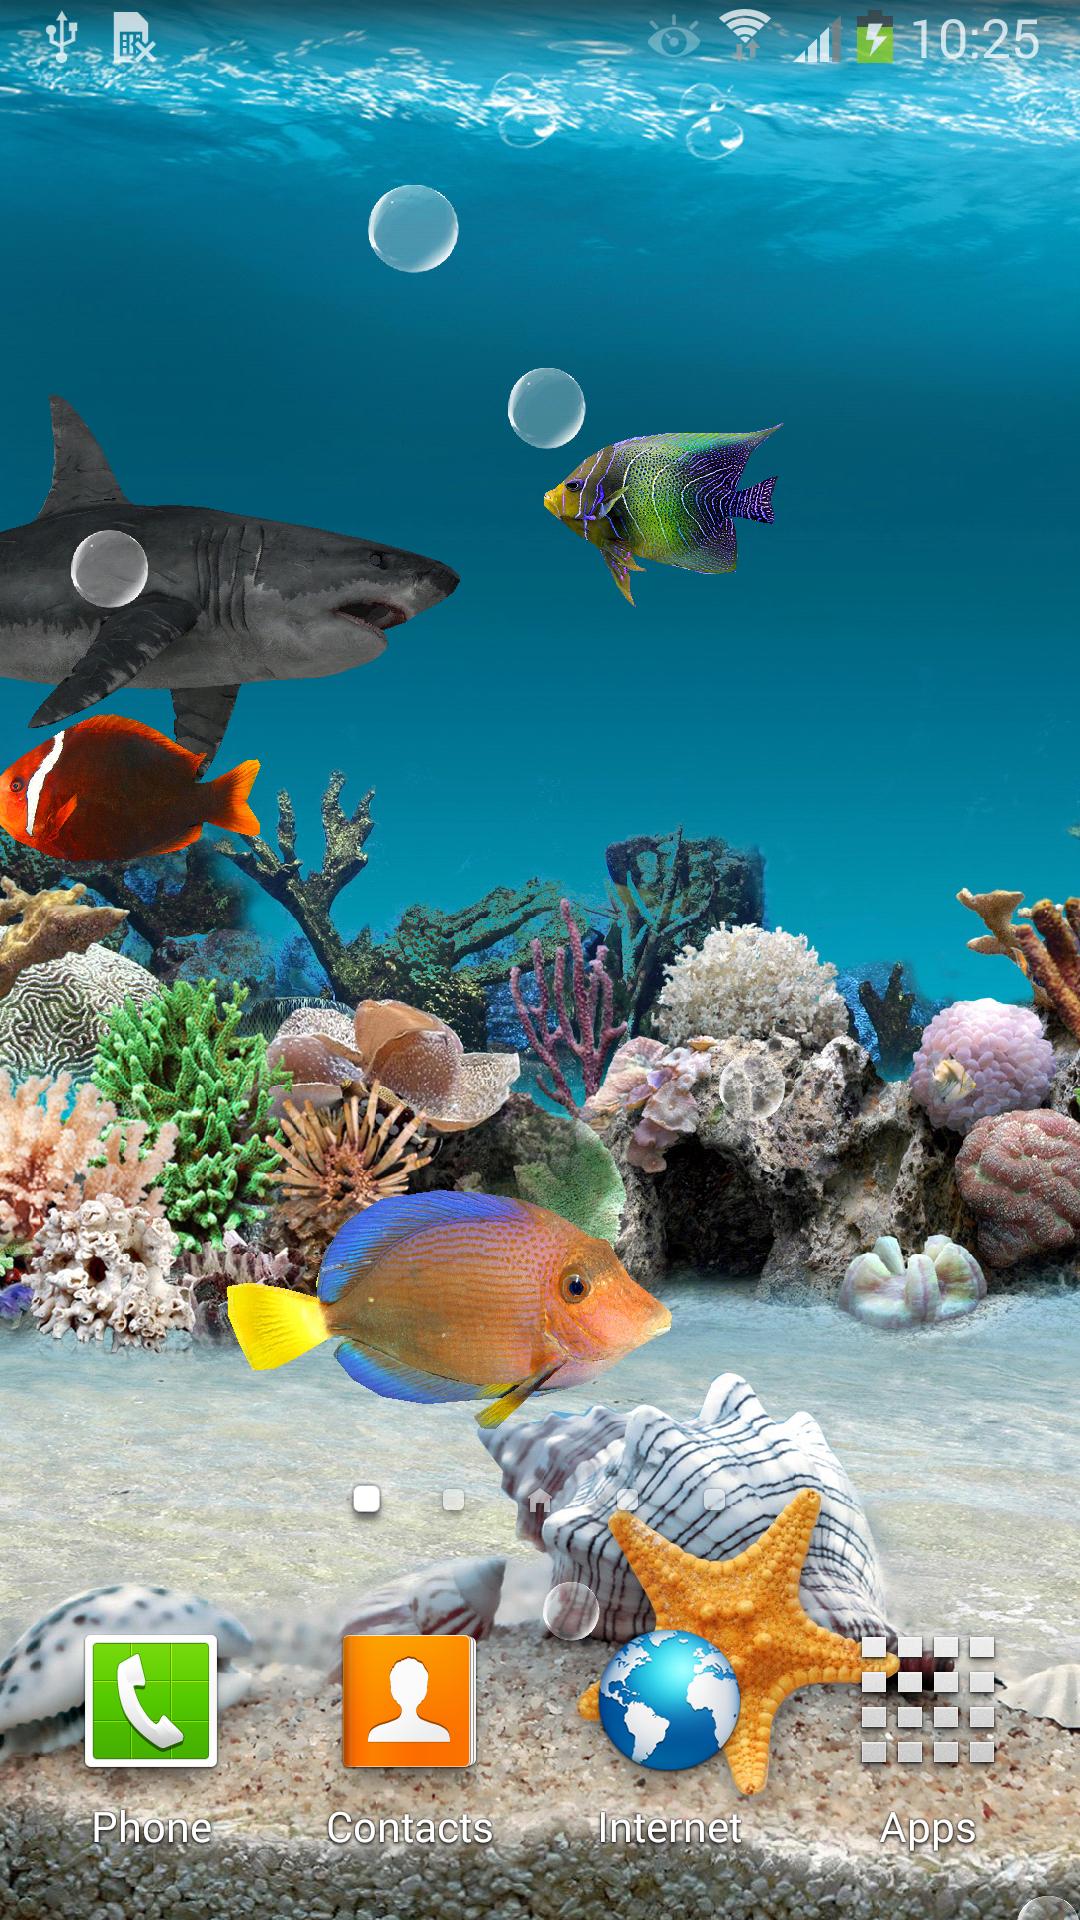 3d魚のライブ壁紙,魚,海洋生物学,魚,サンゴ礁の魚,水中